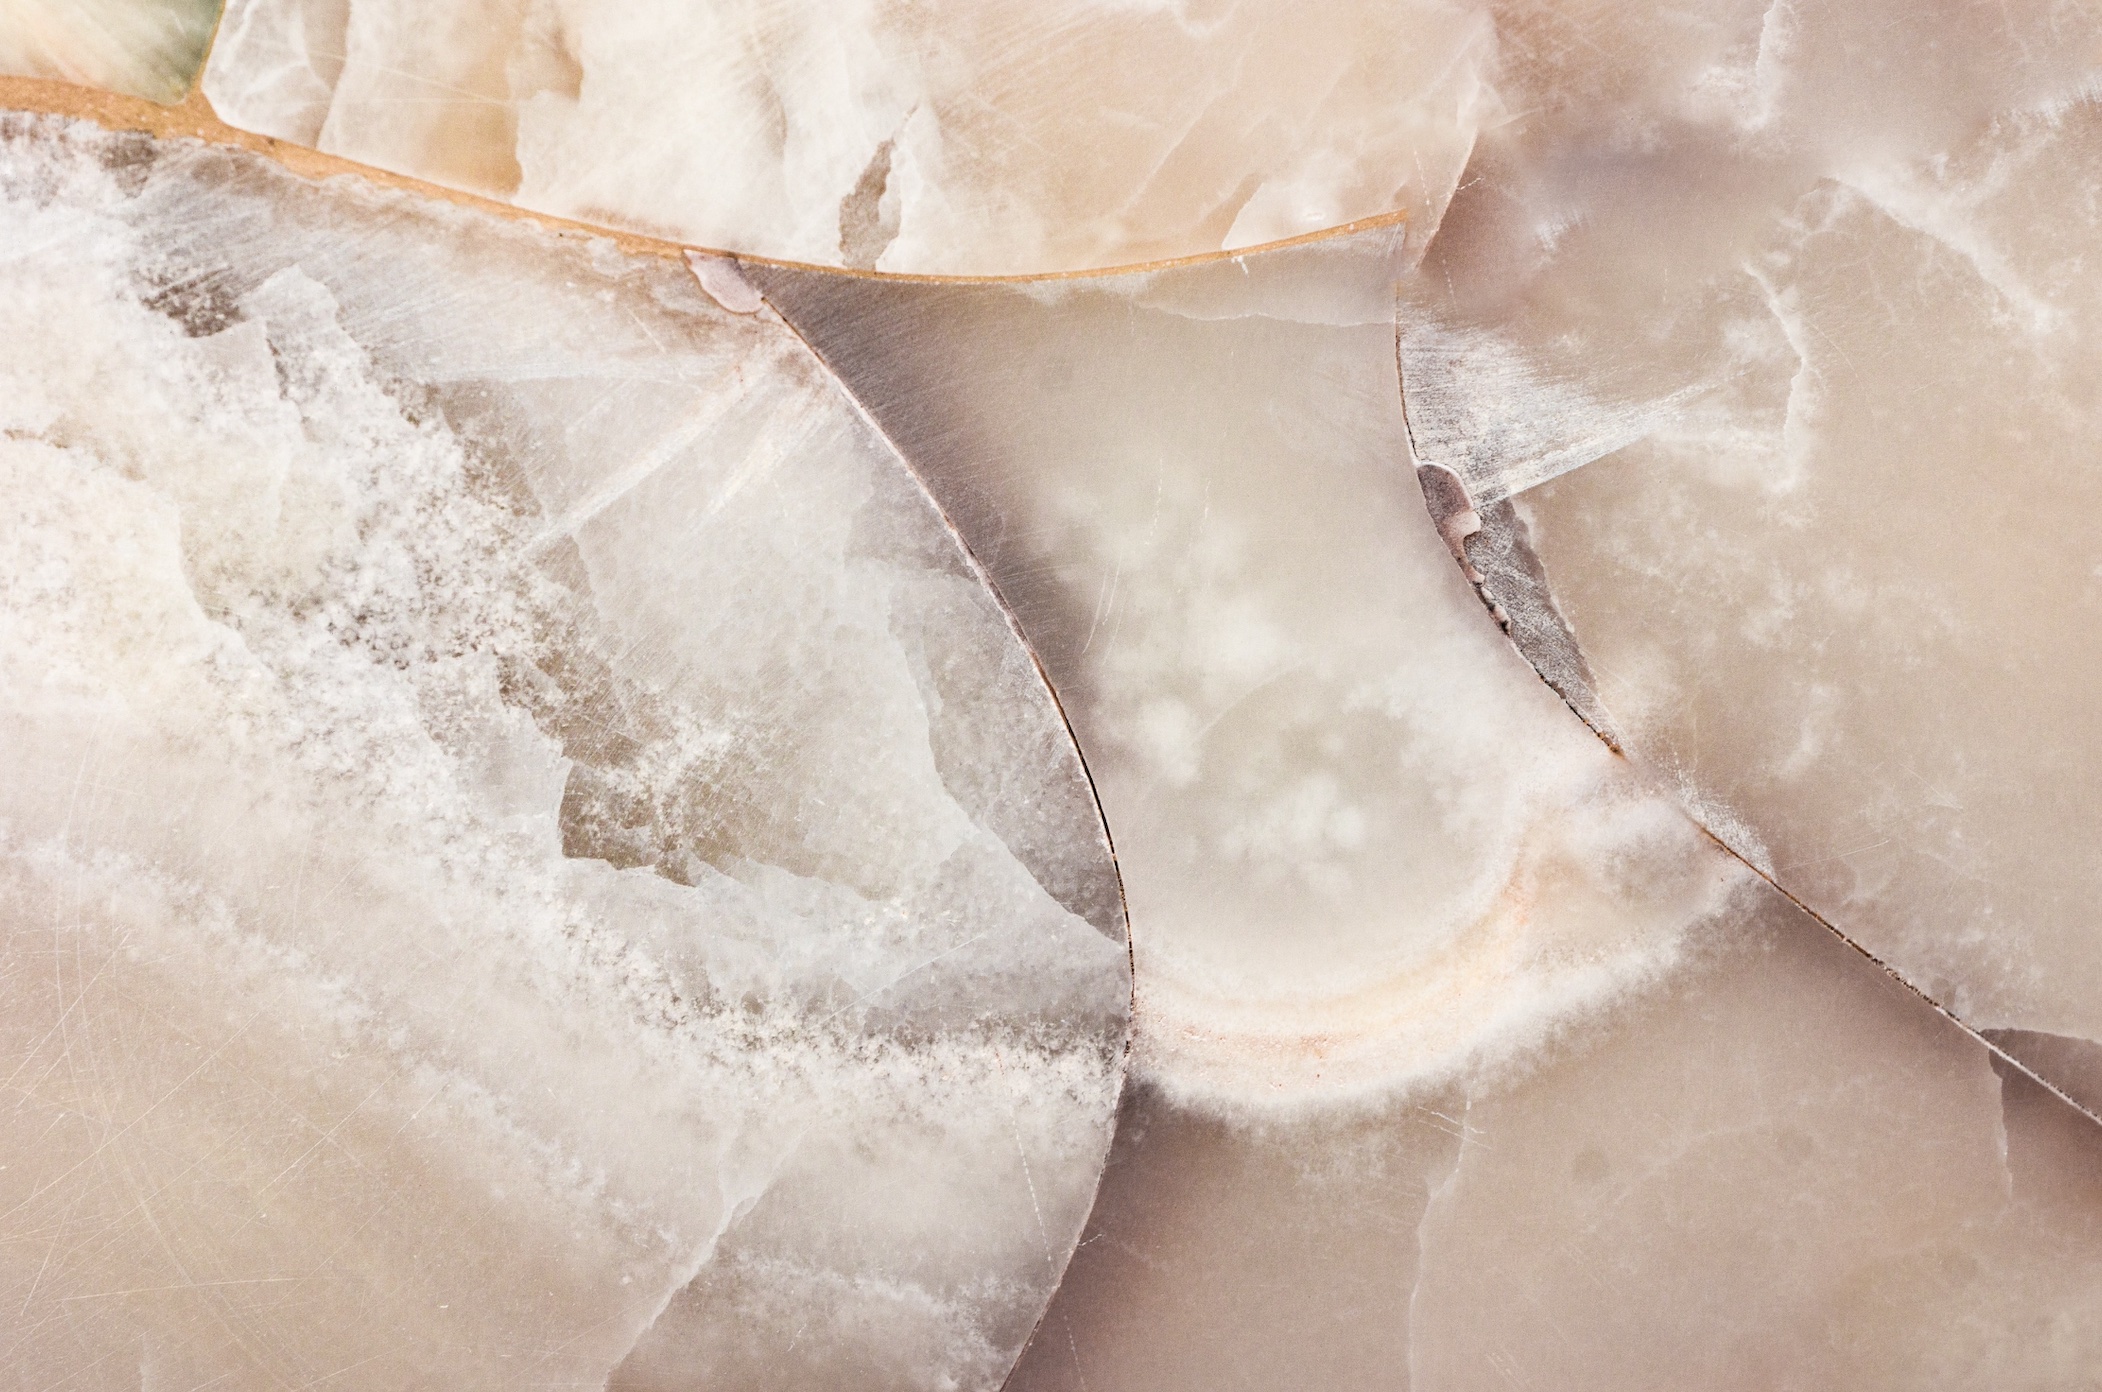 Close up texture of mineral stone, white quartz; image by Olga Thelavart, via Unsplash.com.